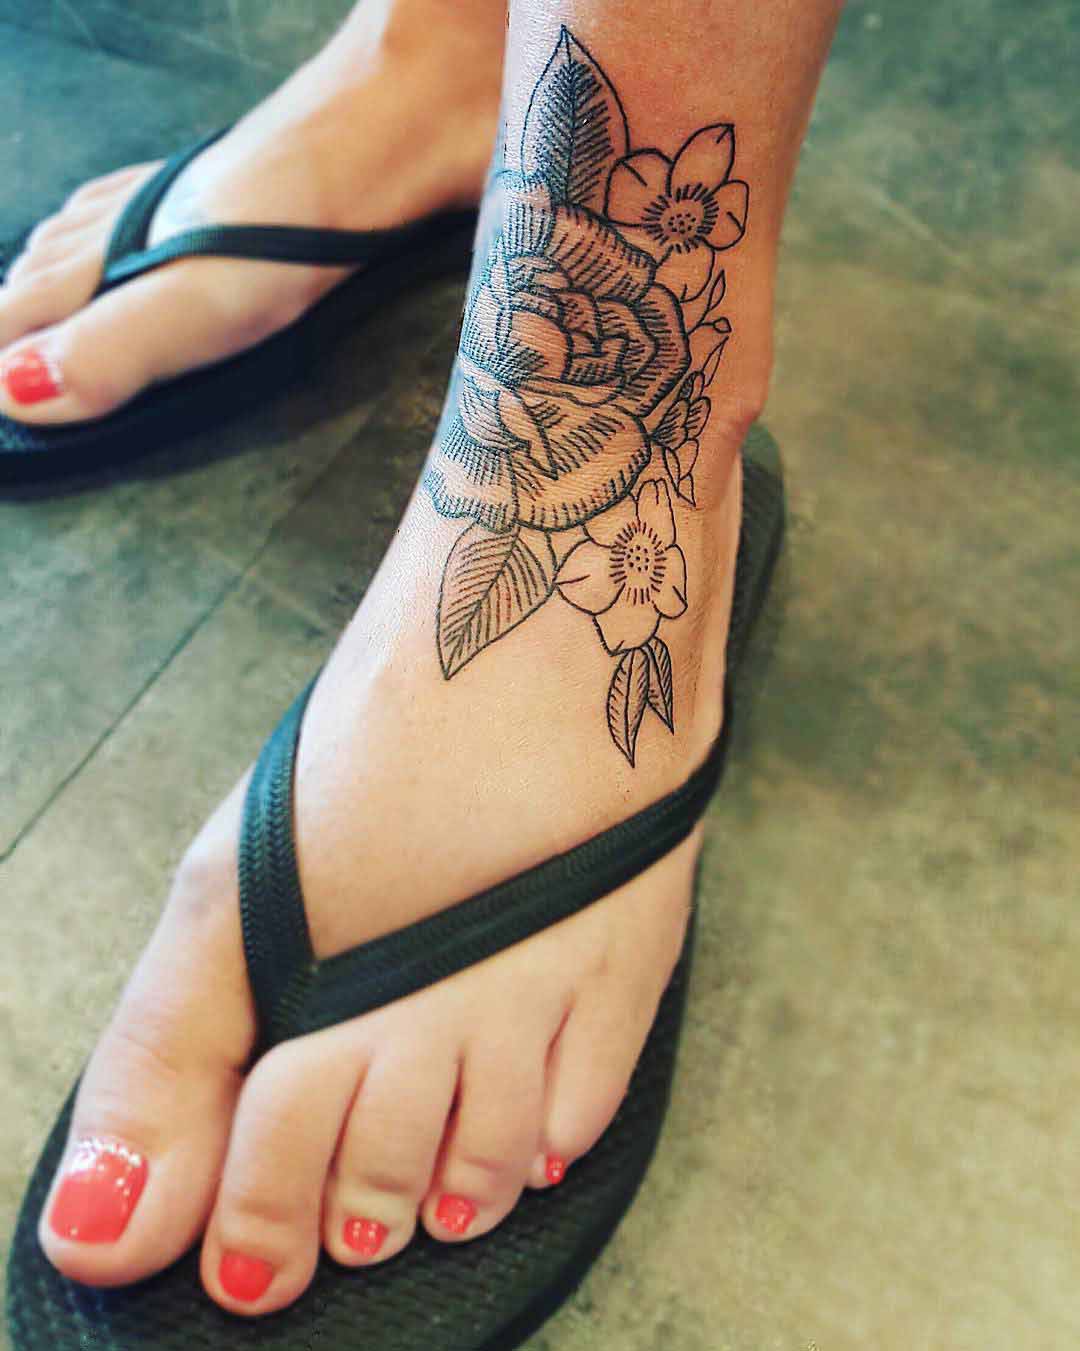 Matching minimalistic flower tattoo for best friends.